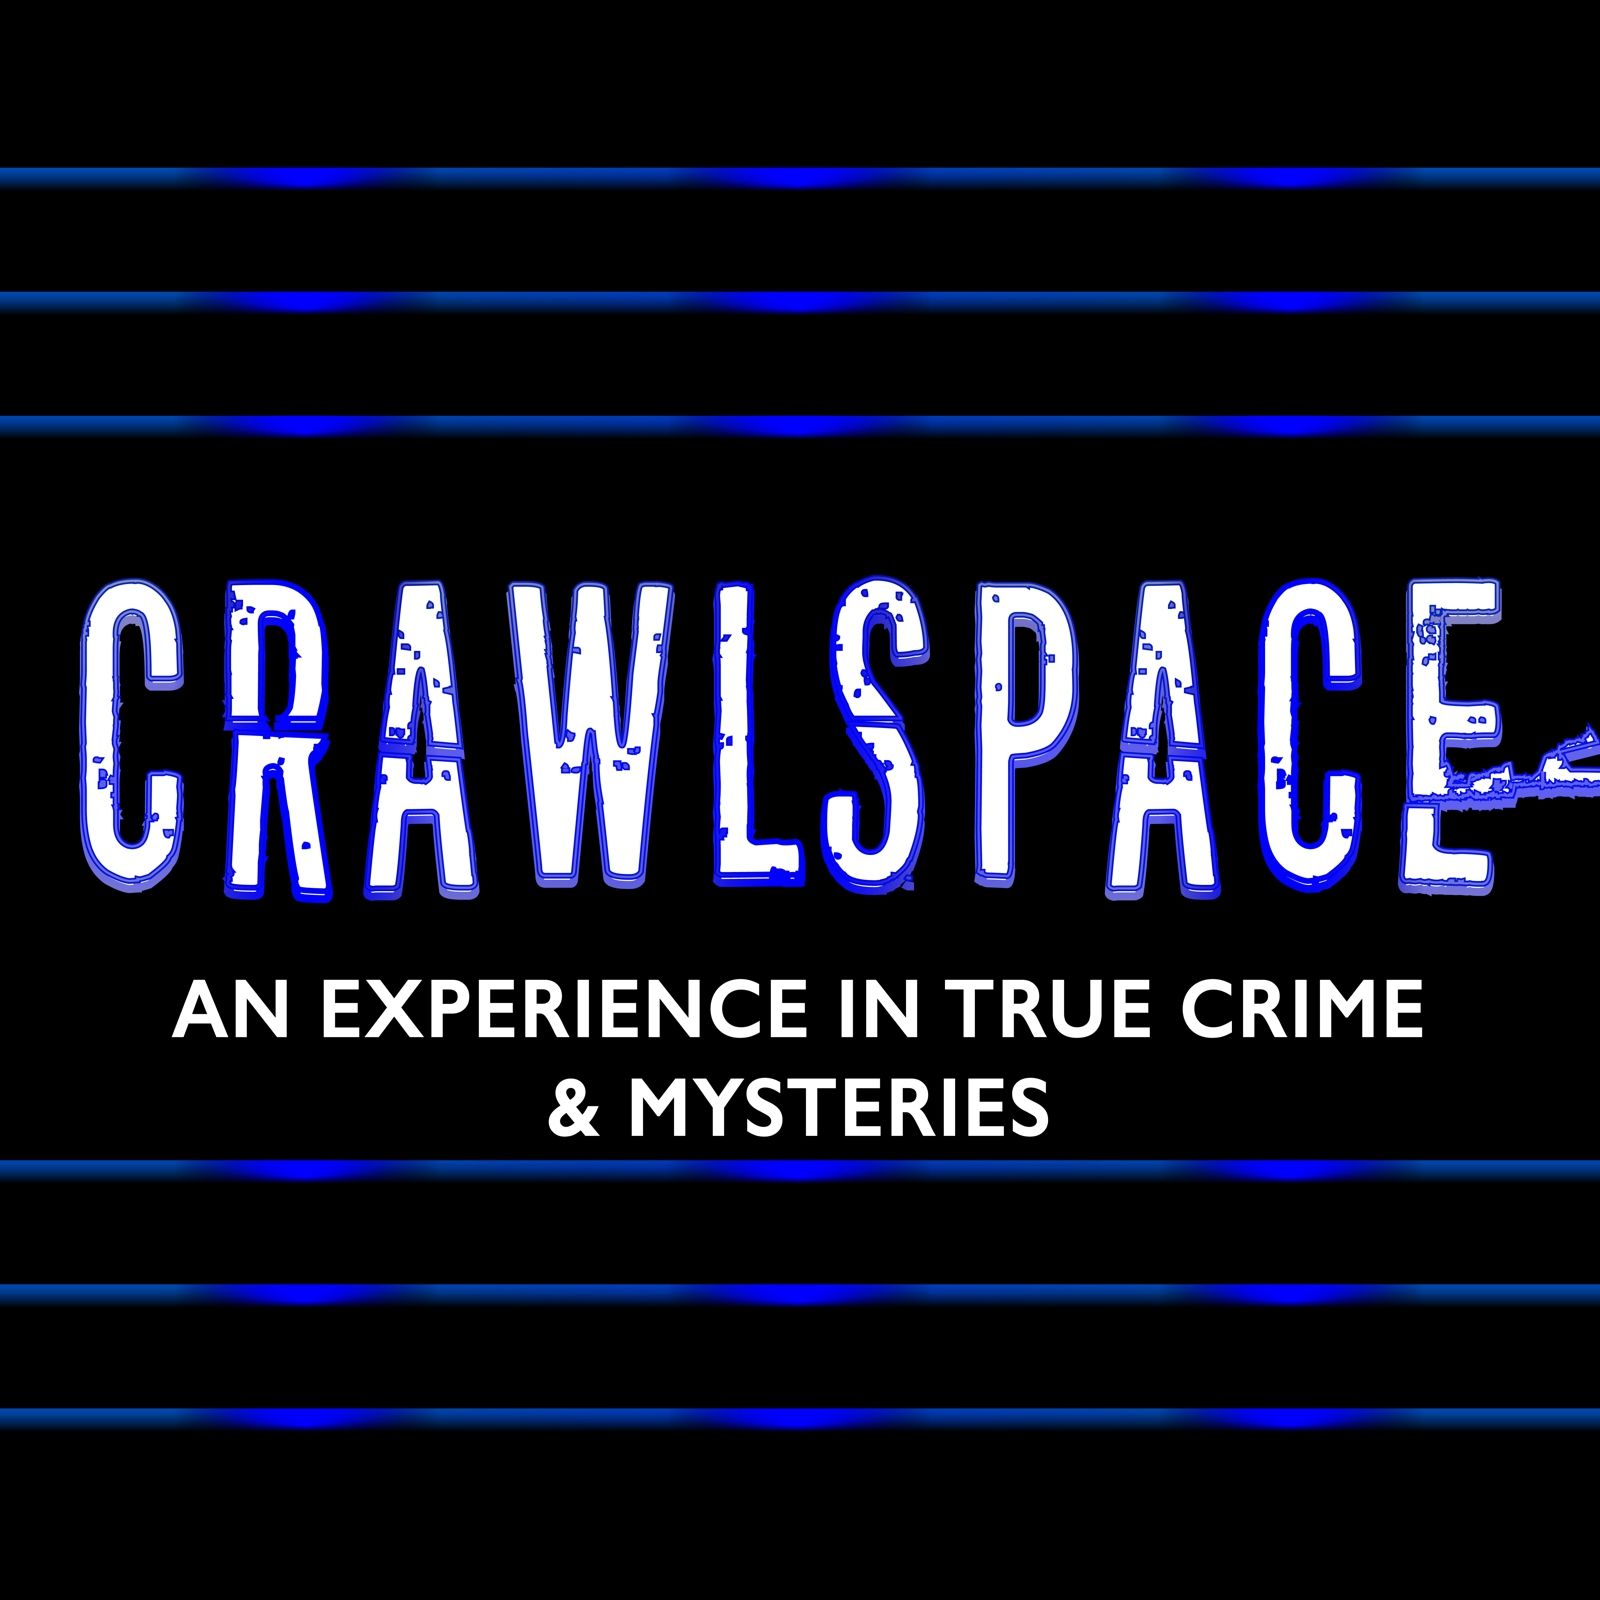 True Crime Podcast. Crawlspace. True experience